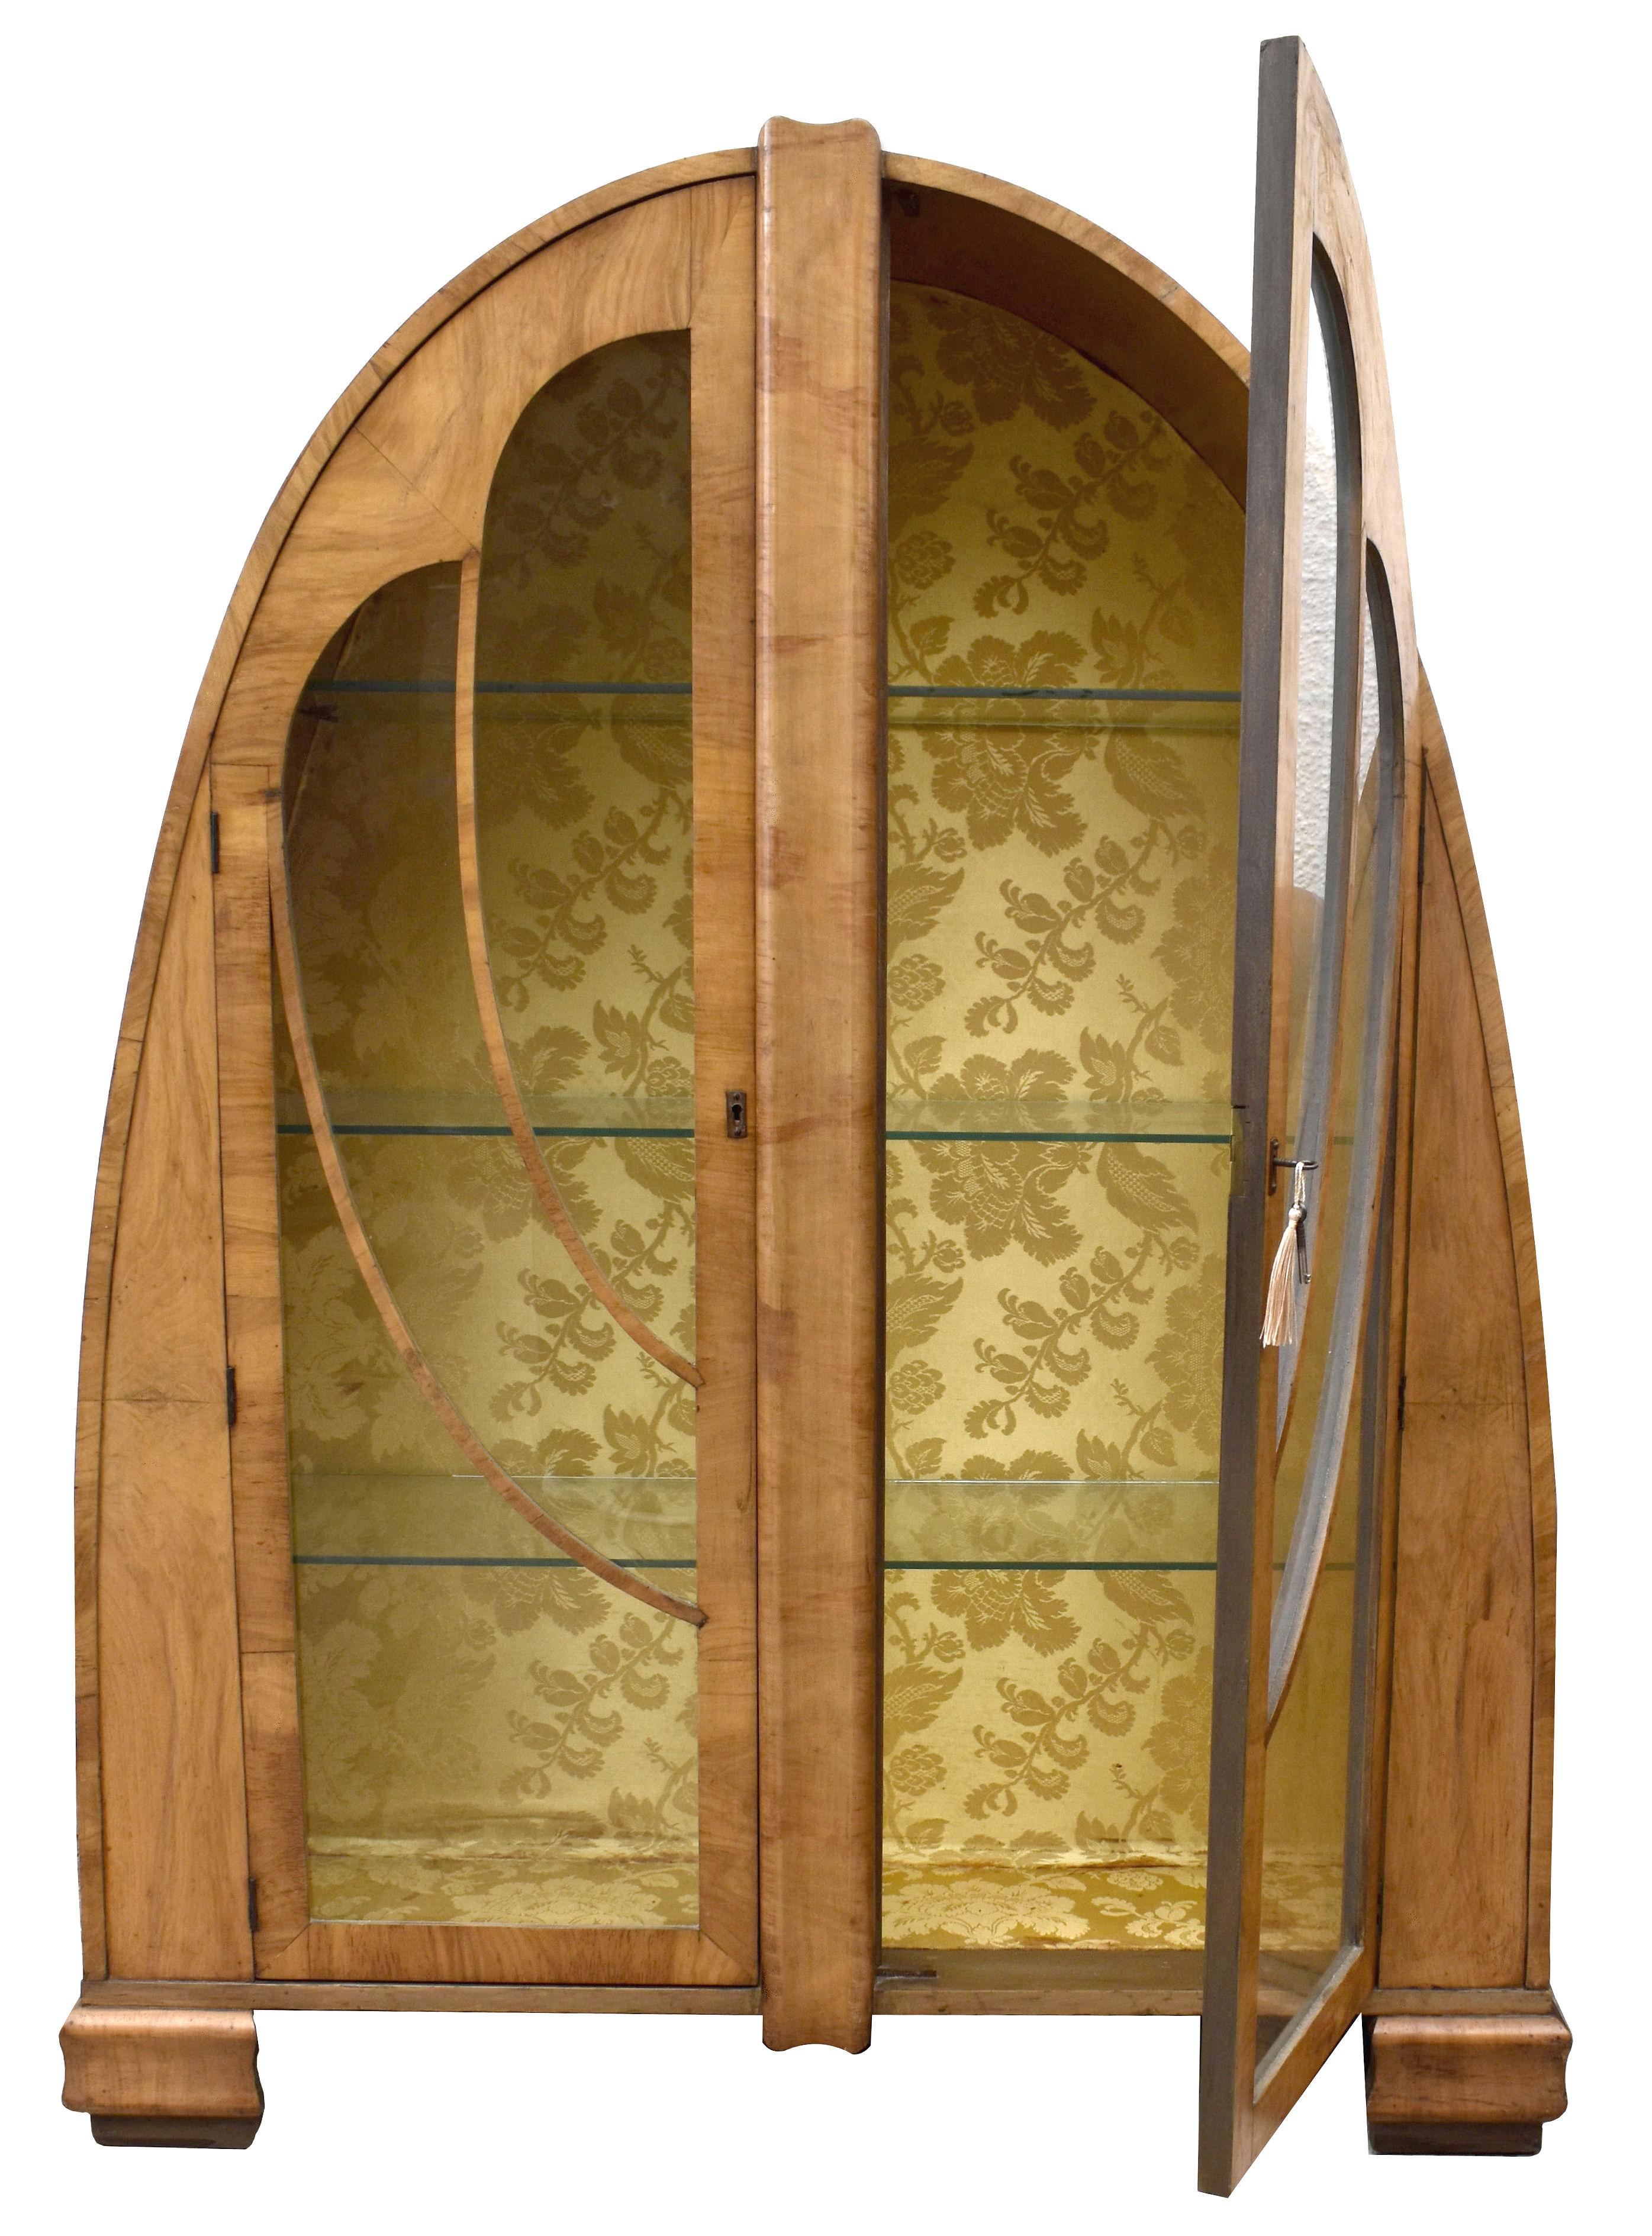 20th Century Art Deco Rare Cathedral Display Vitrine Cabinet in Walnut, English, 1930s